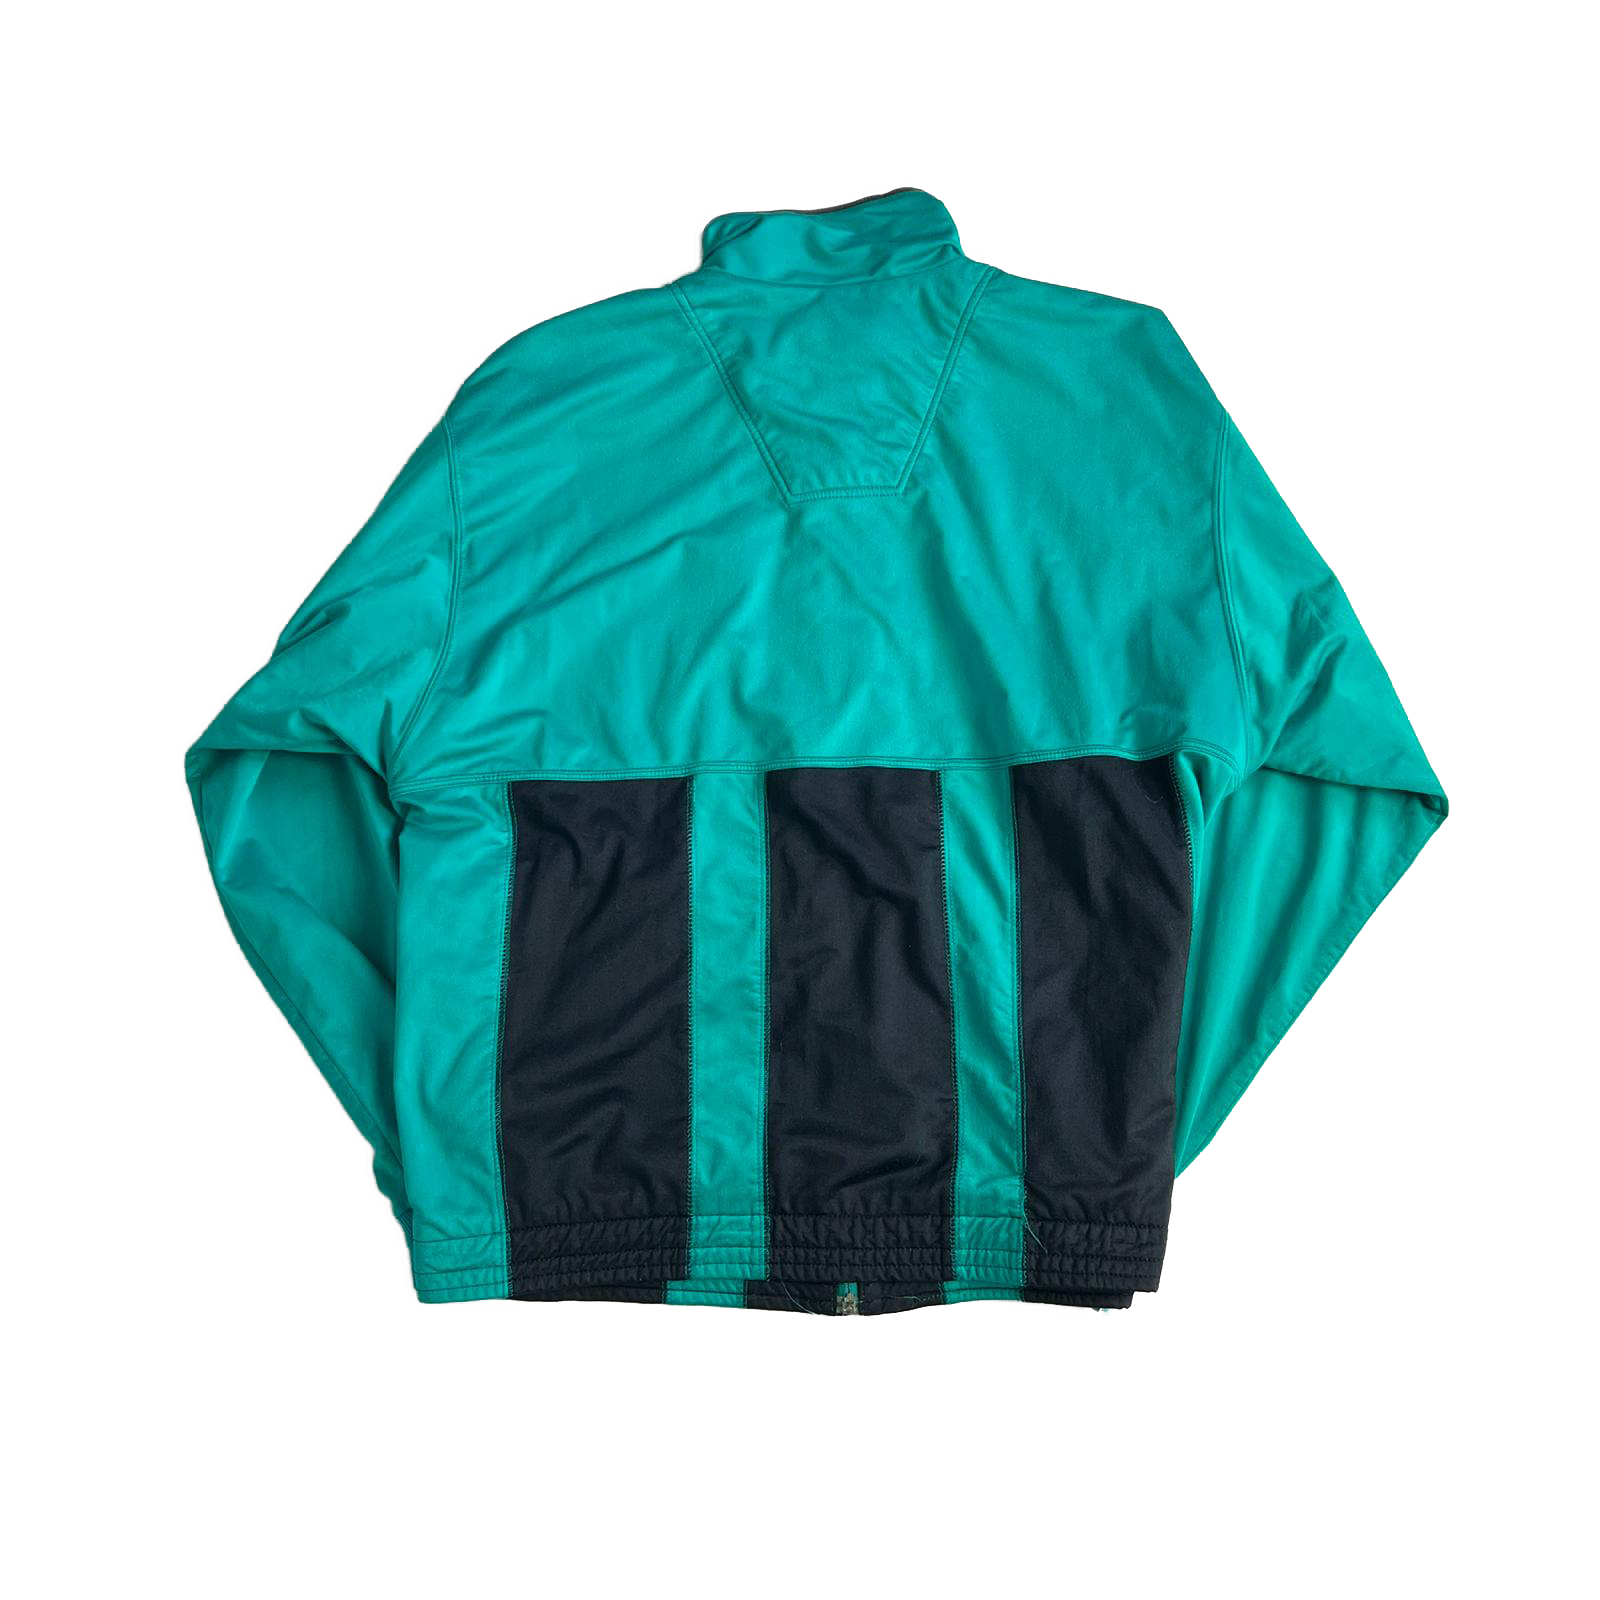 90's Adidas EQT track jacket